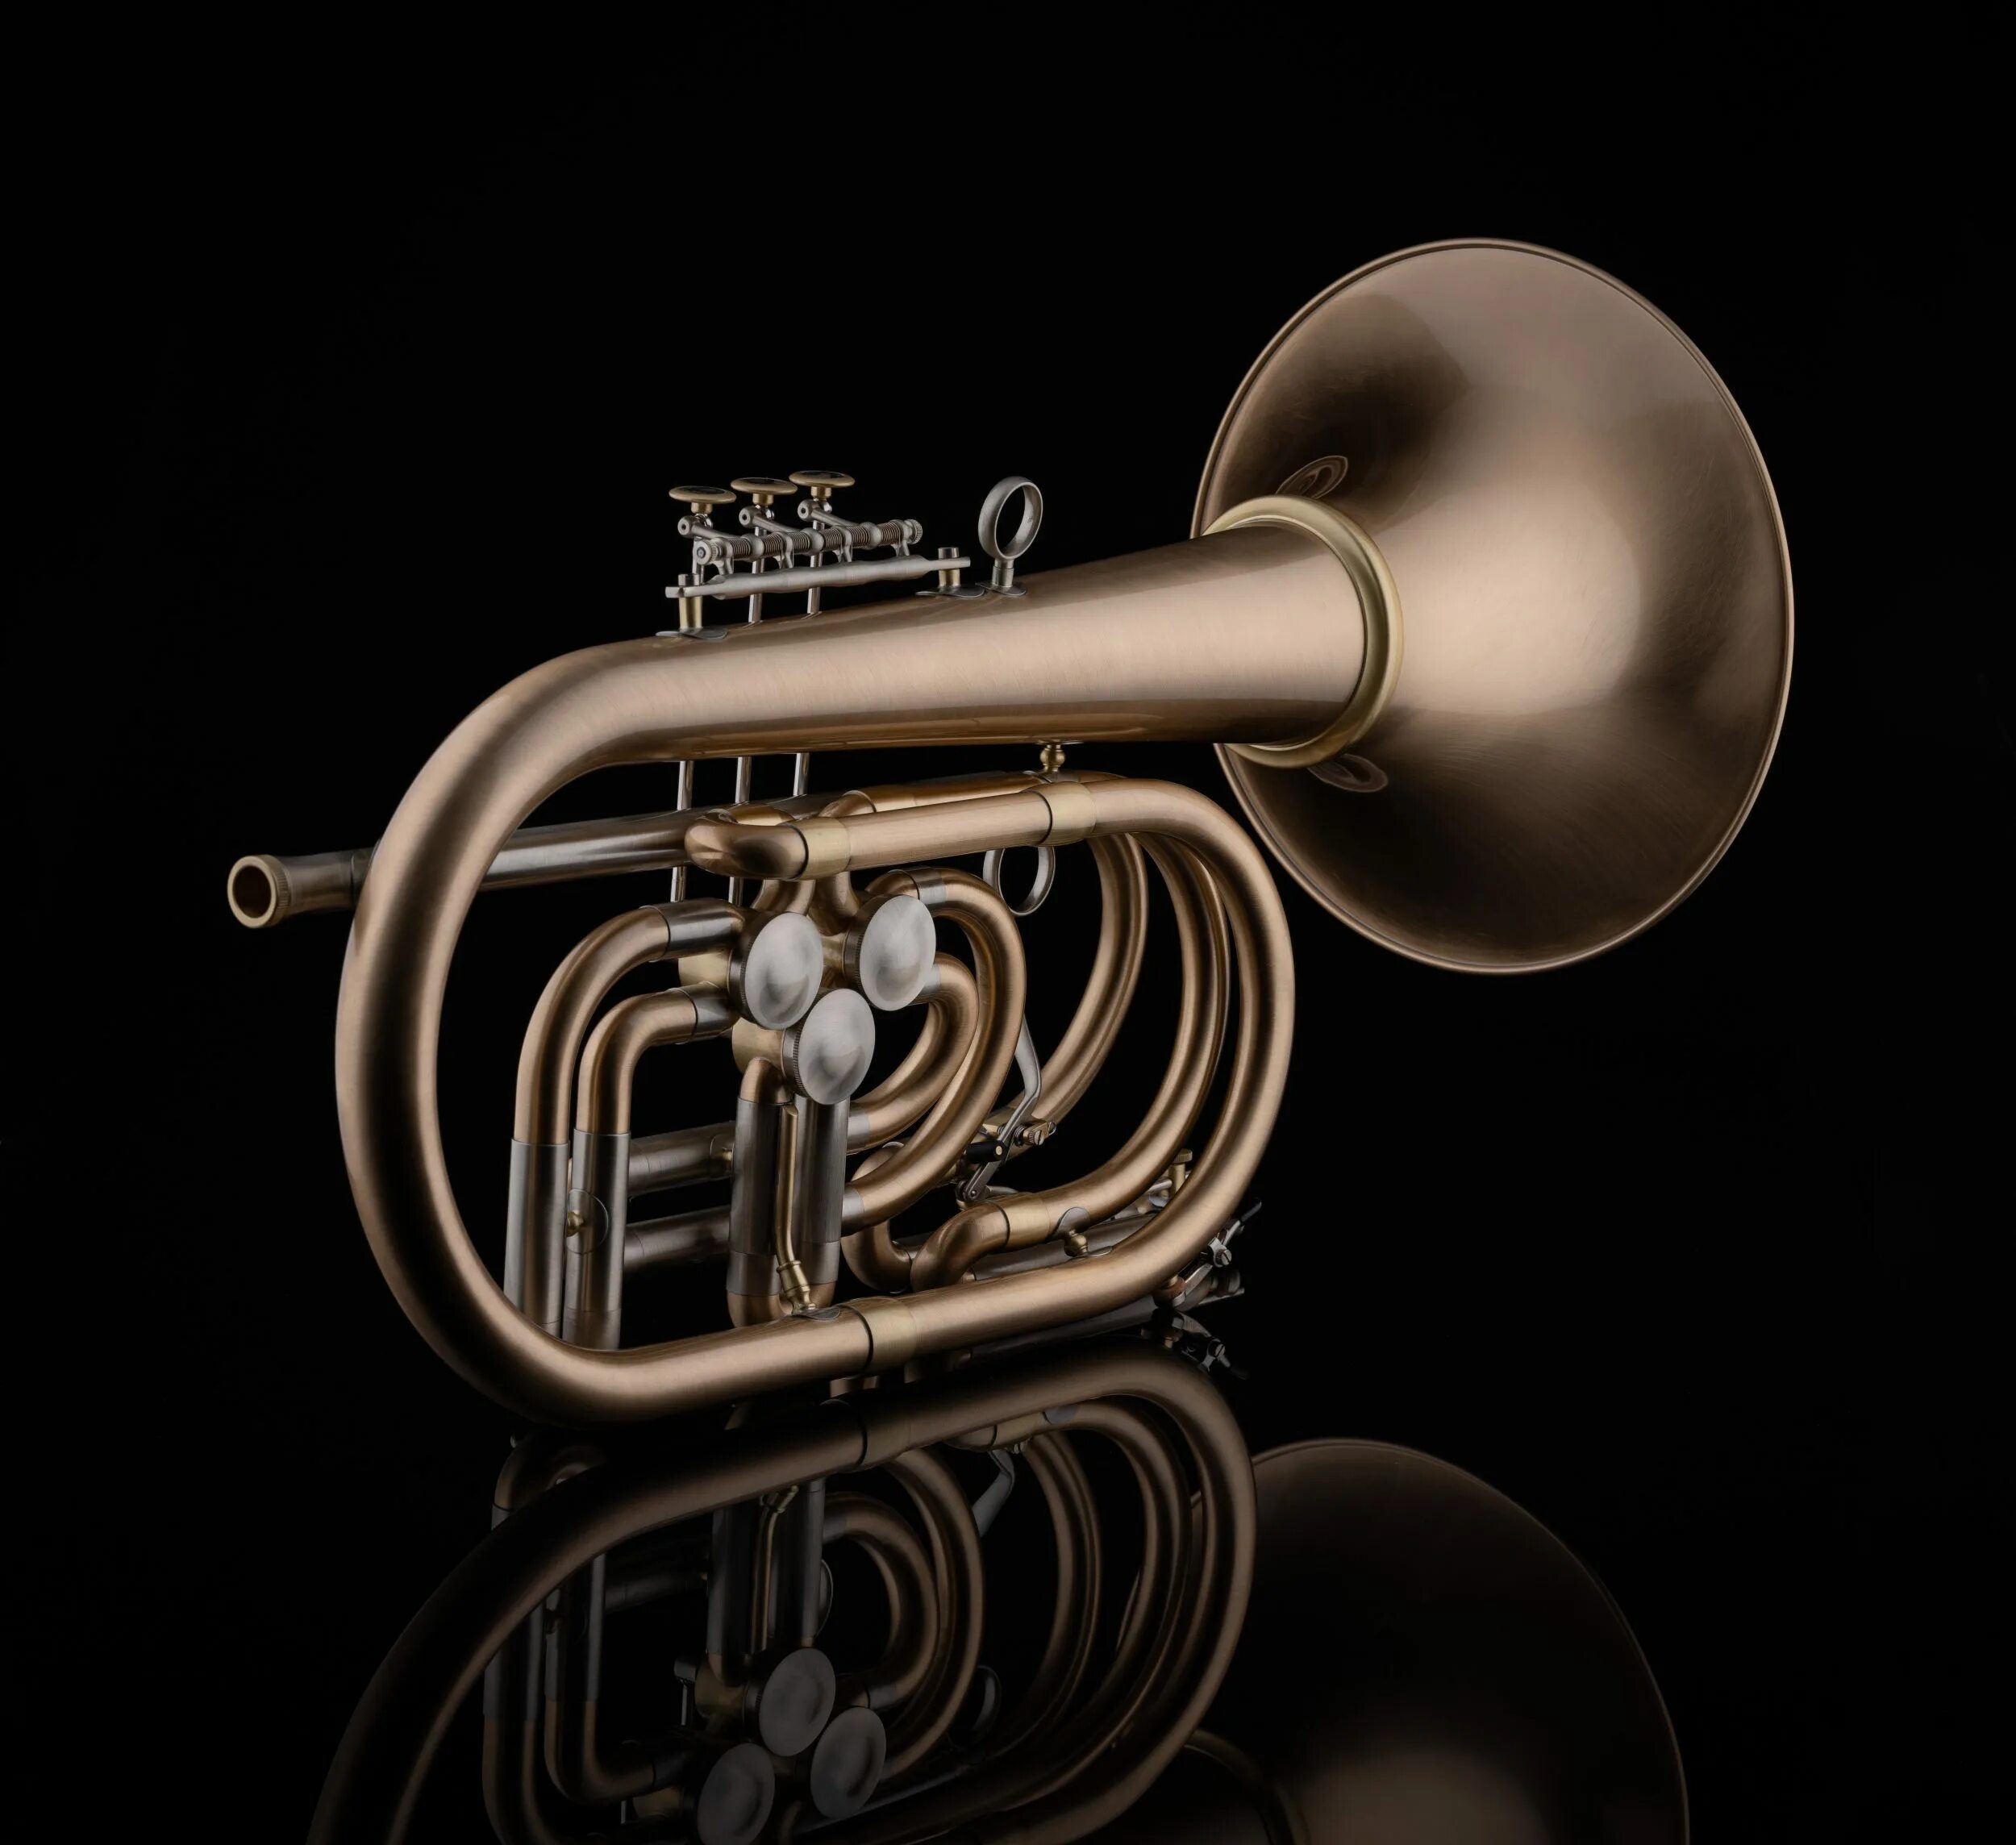 Бас труба звук. Schagerl Trumpet. Труба бас б1. Бас труба музыкальный инструмент. Музыкальный инструмент труба бас большая.